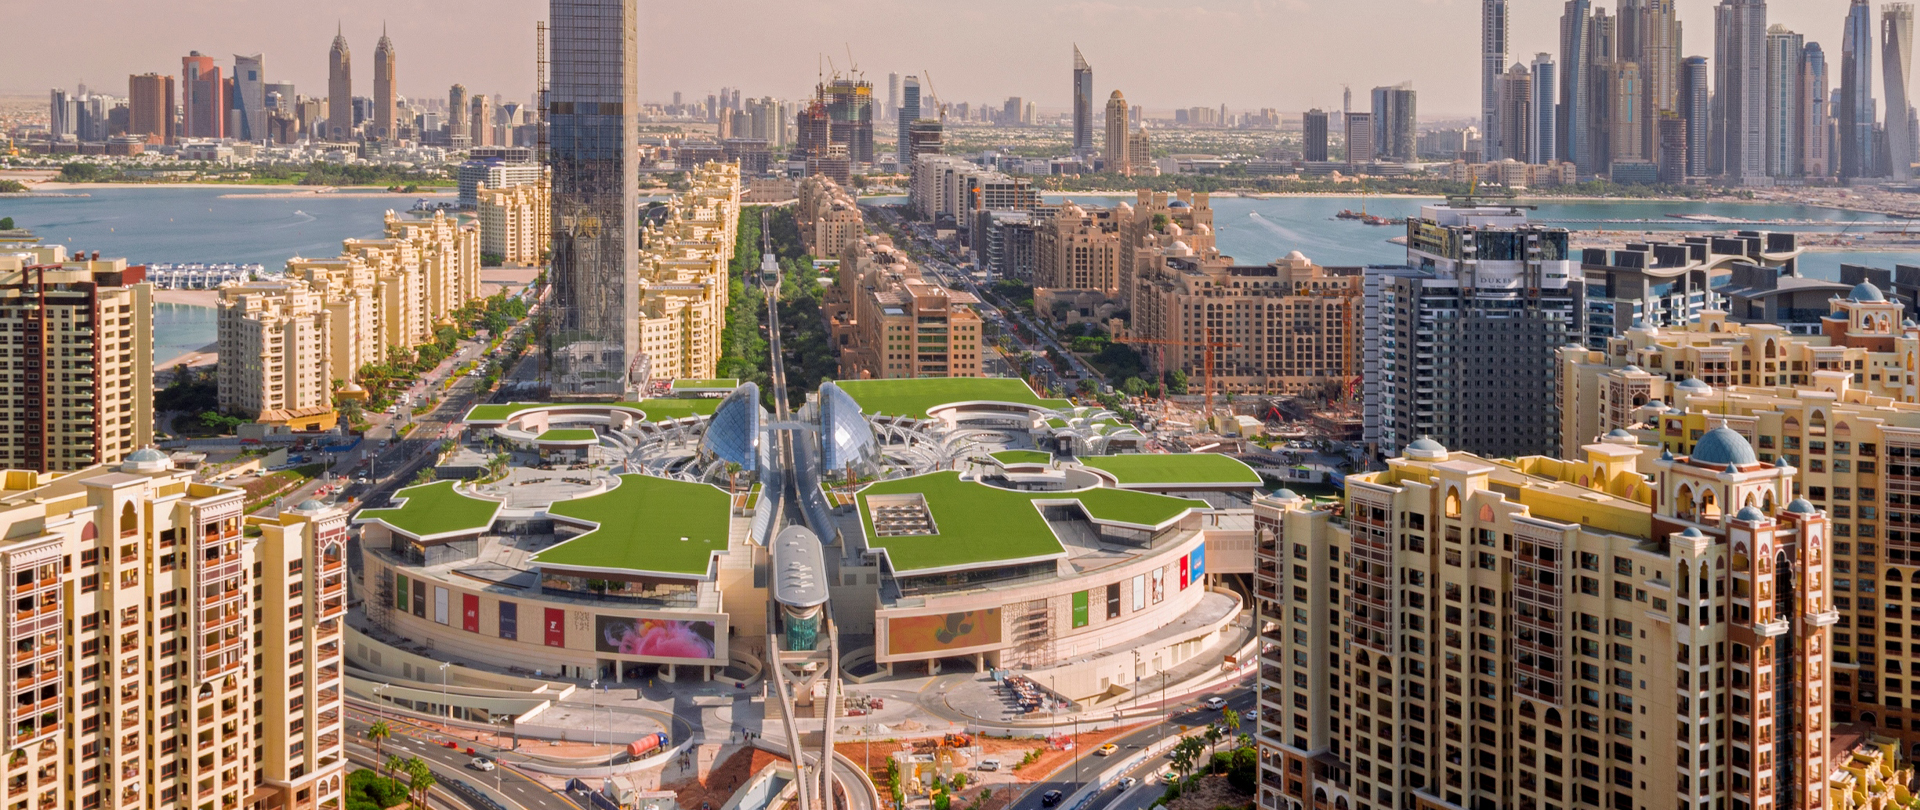 Nakheel Mall on Dubai’s Palm Jumeirah to open on 28 November 2019  